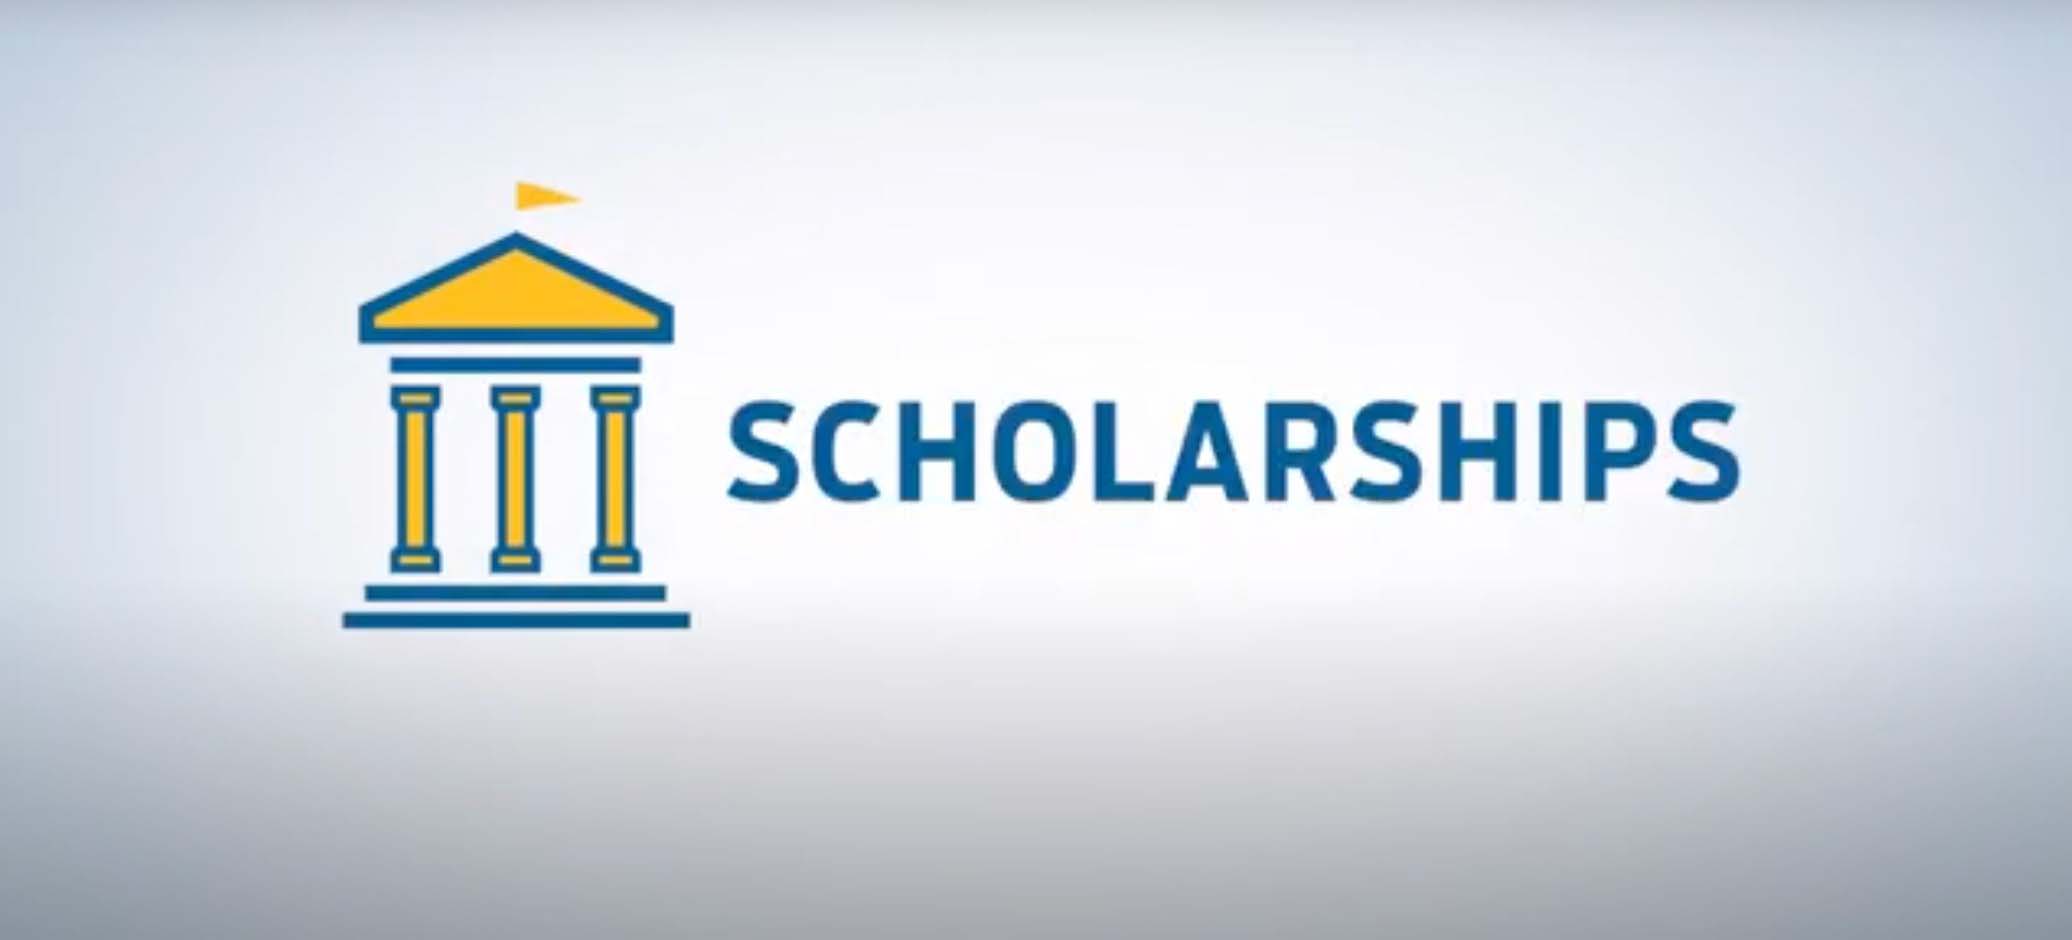 Video Scholarships